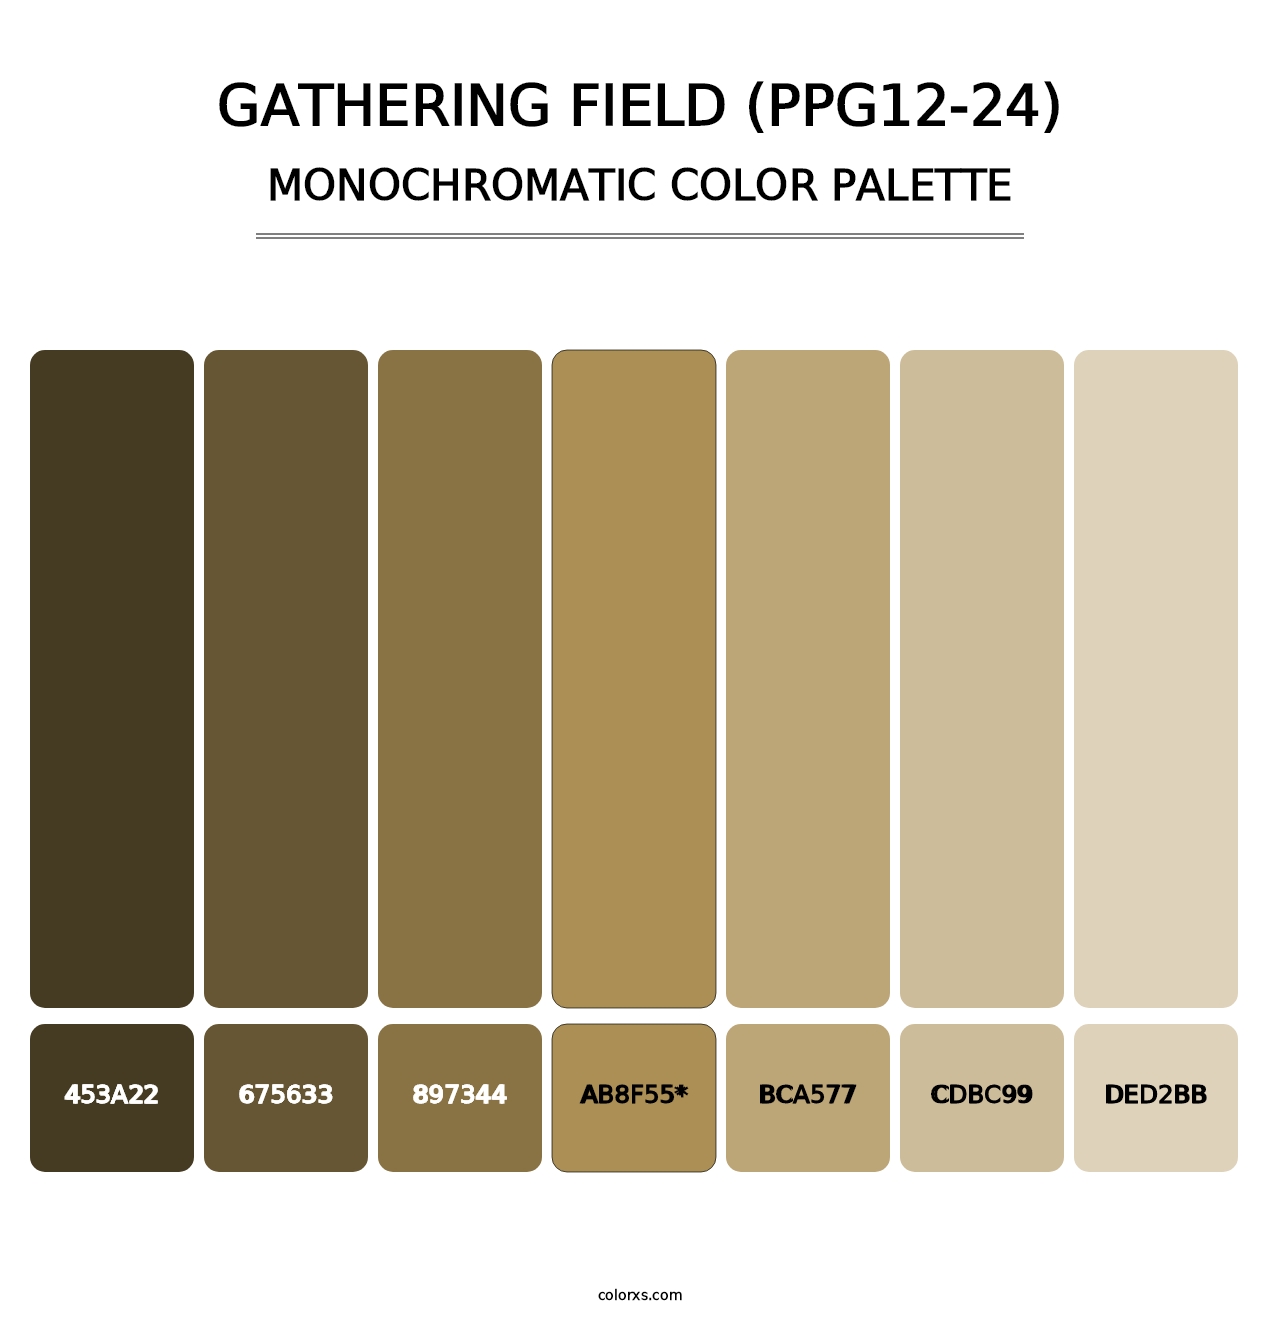 Gathering Field (PPG12-24) - Monochromatic Color Palette